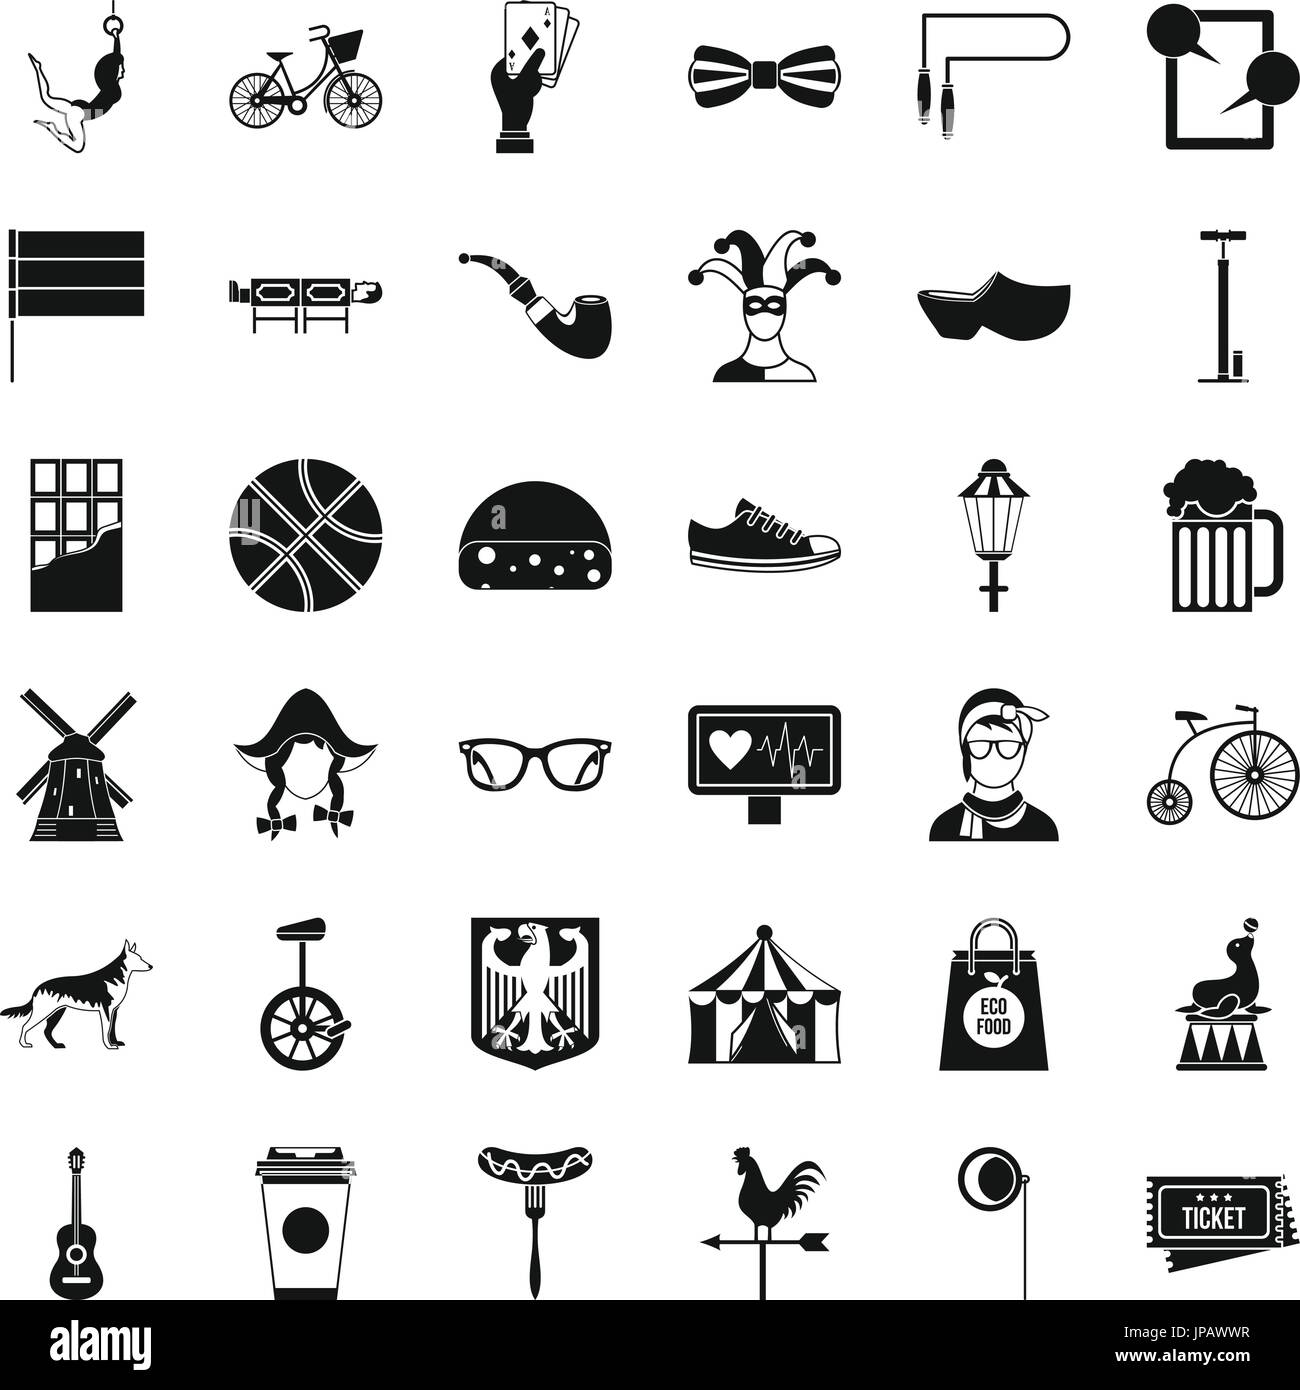 Bike icons set, simple style Stock Vector Image & Art - Alamy